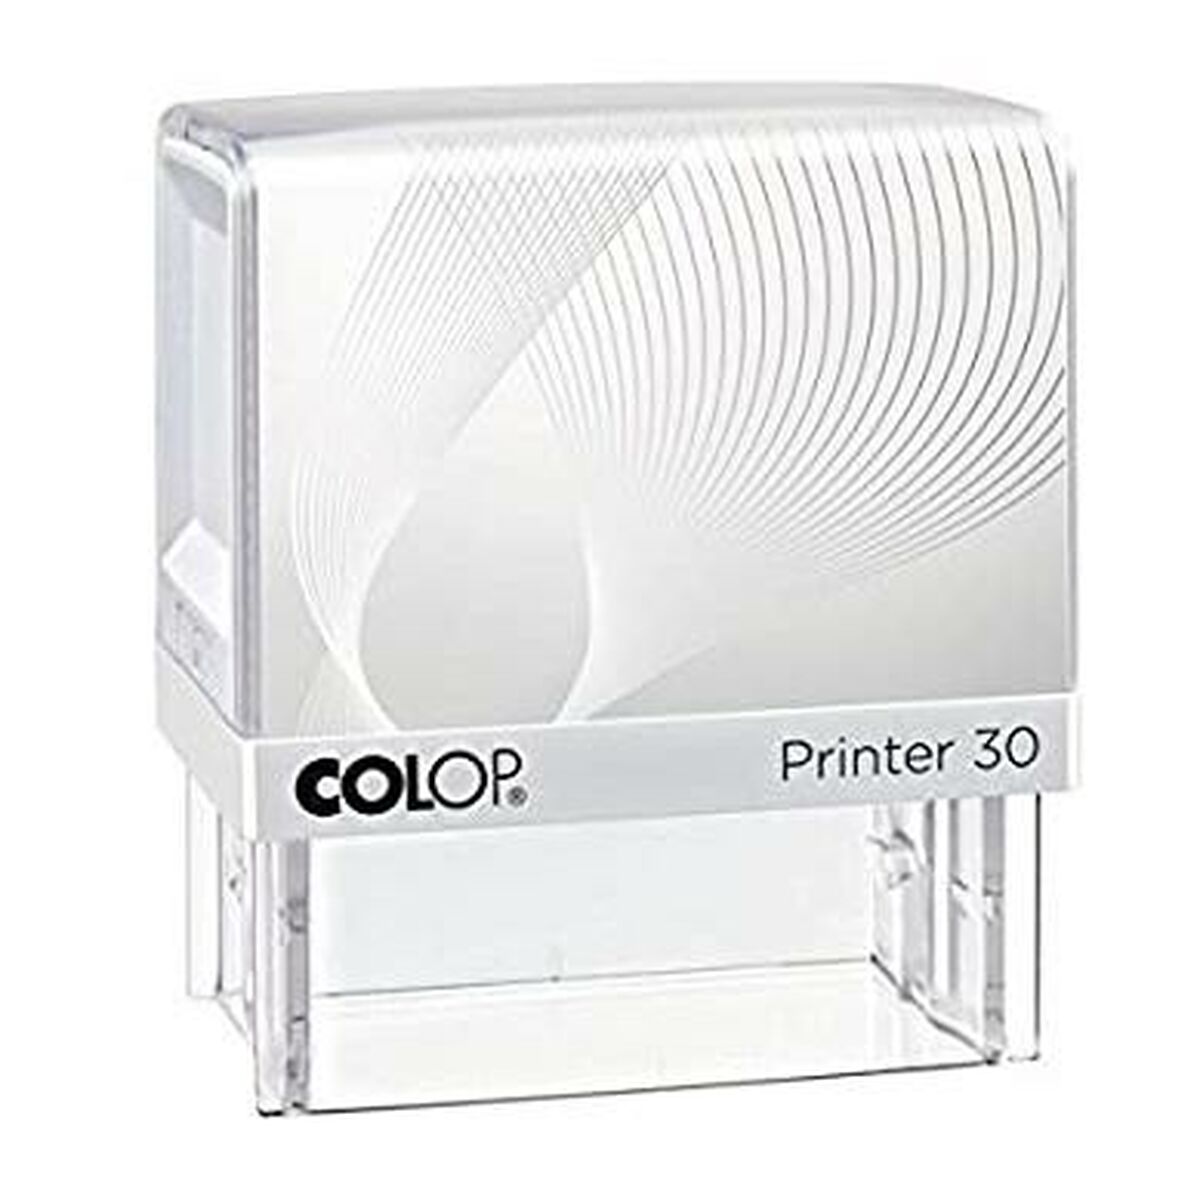 Leima Colop Printer 30 Valkoinen 18 x 47 mm